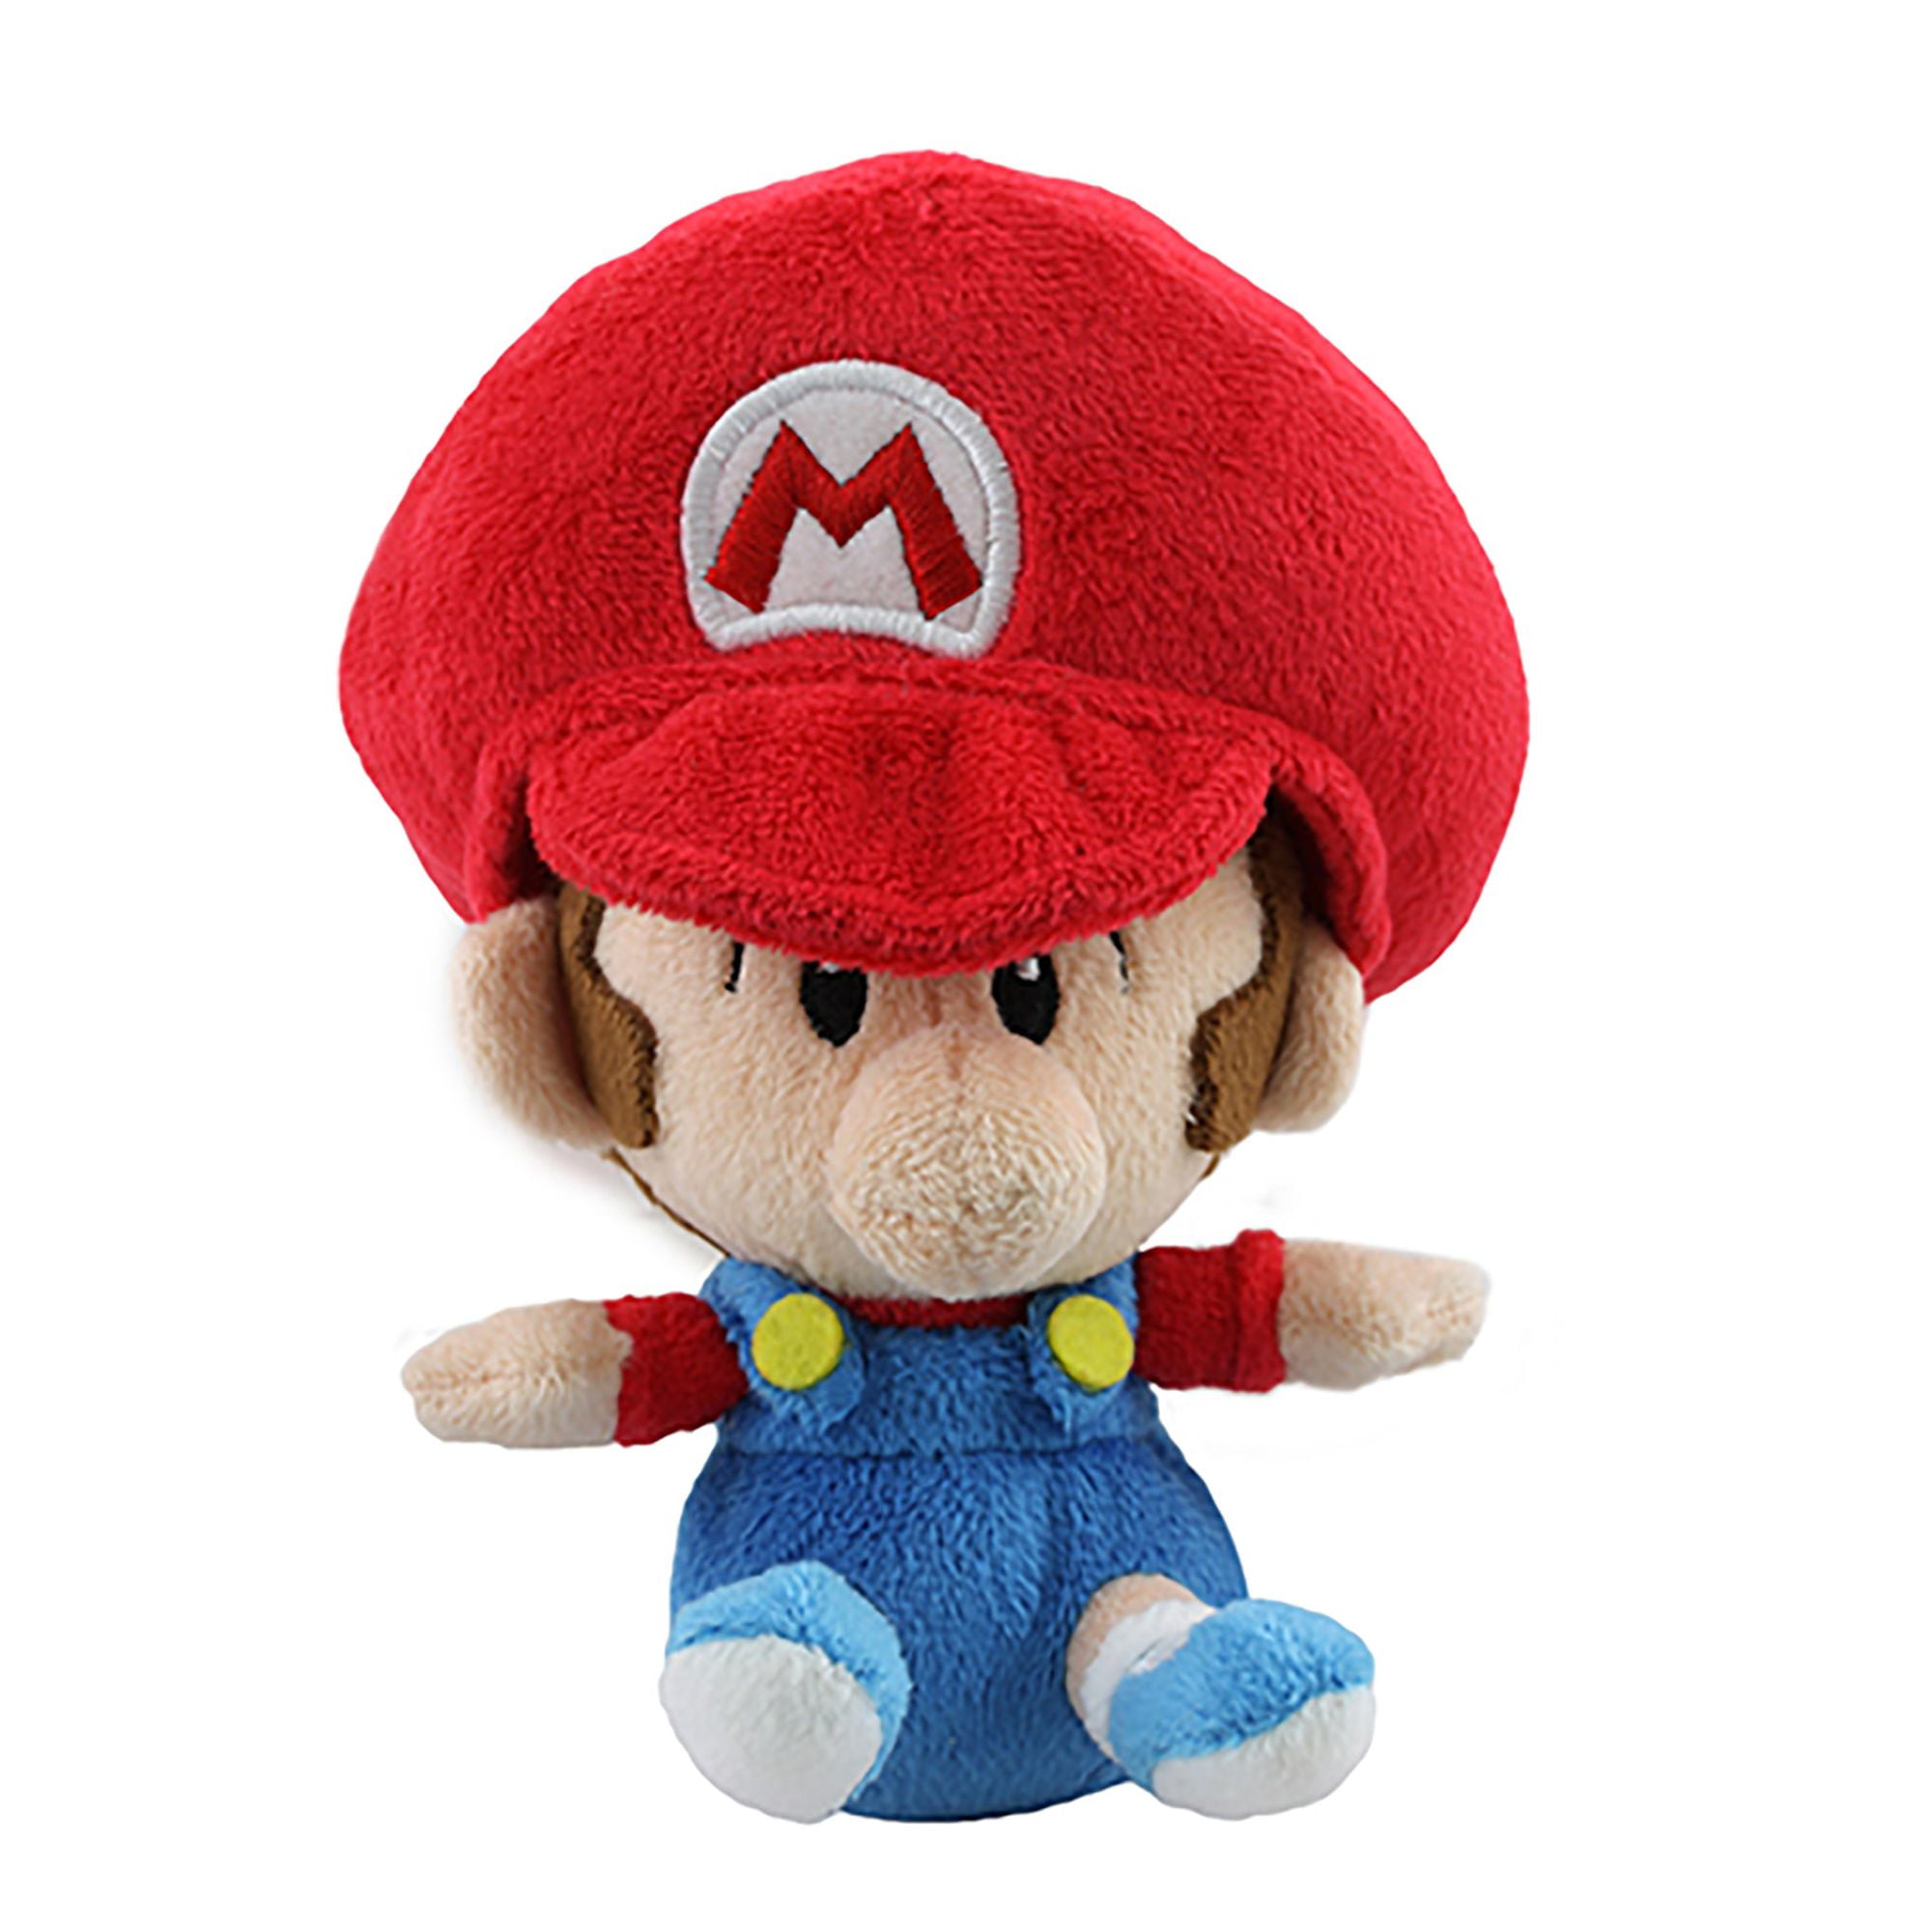 Super Mario Brothers 6" Baby Mario Plush Toy Stuffed Animal Doll Kids Gift